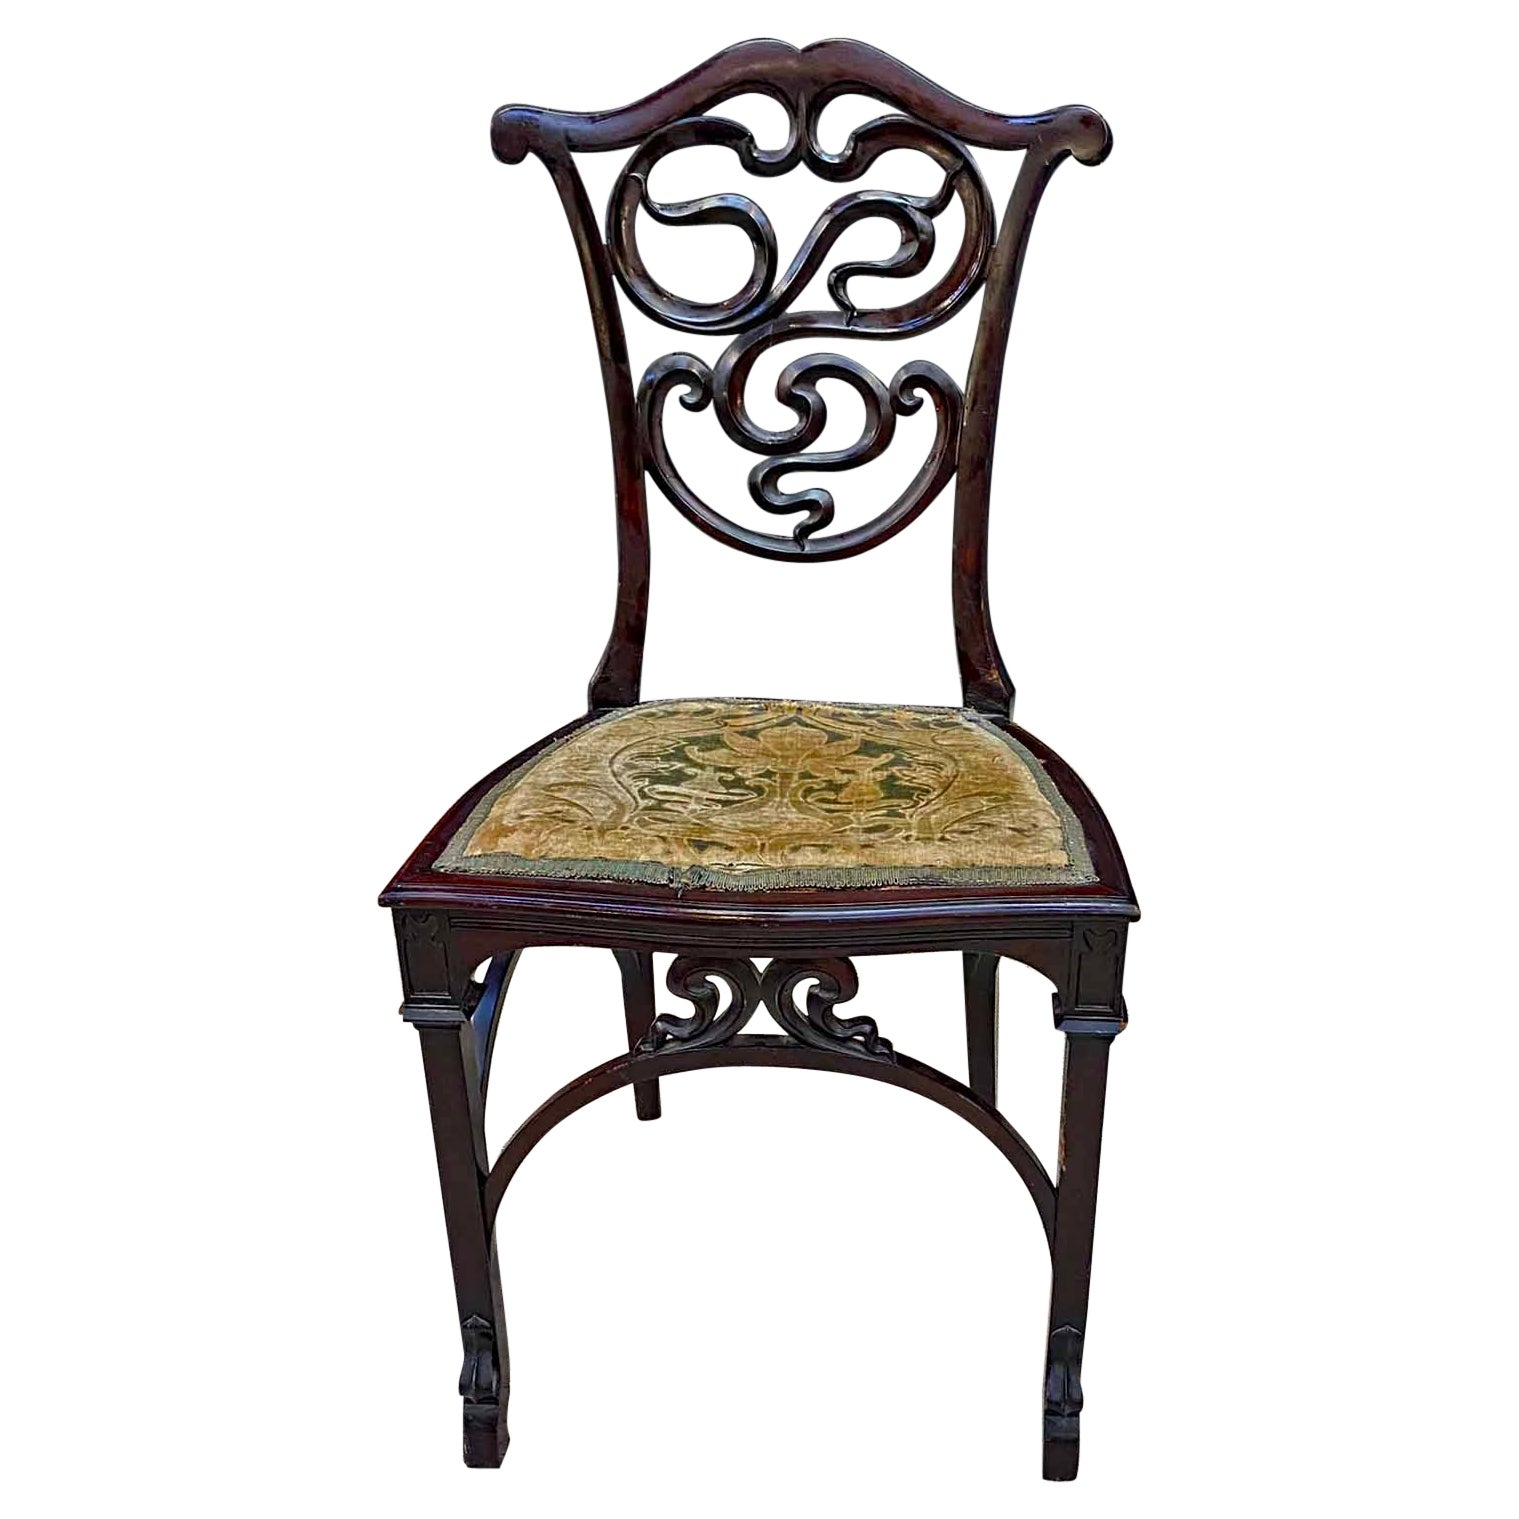 Jugendstil-Stuhl mit chinesischem Muster, um 1880 